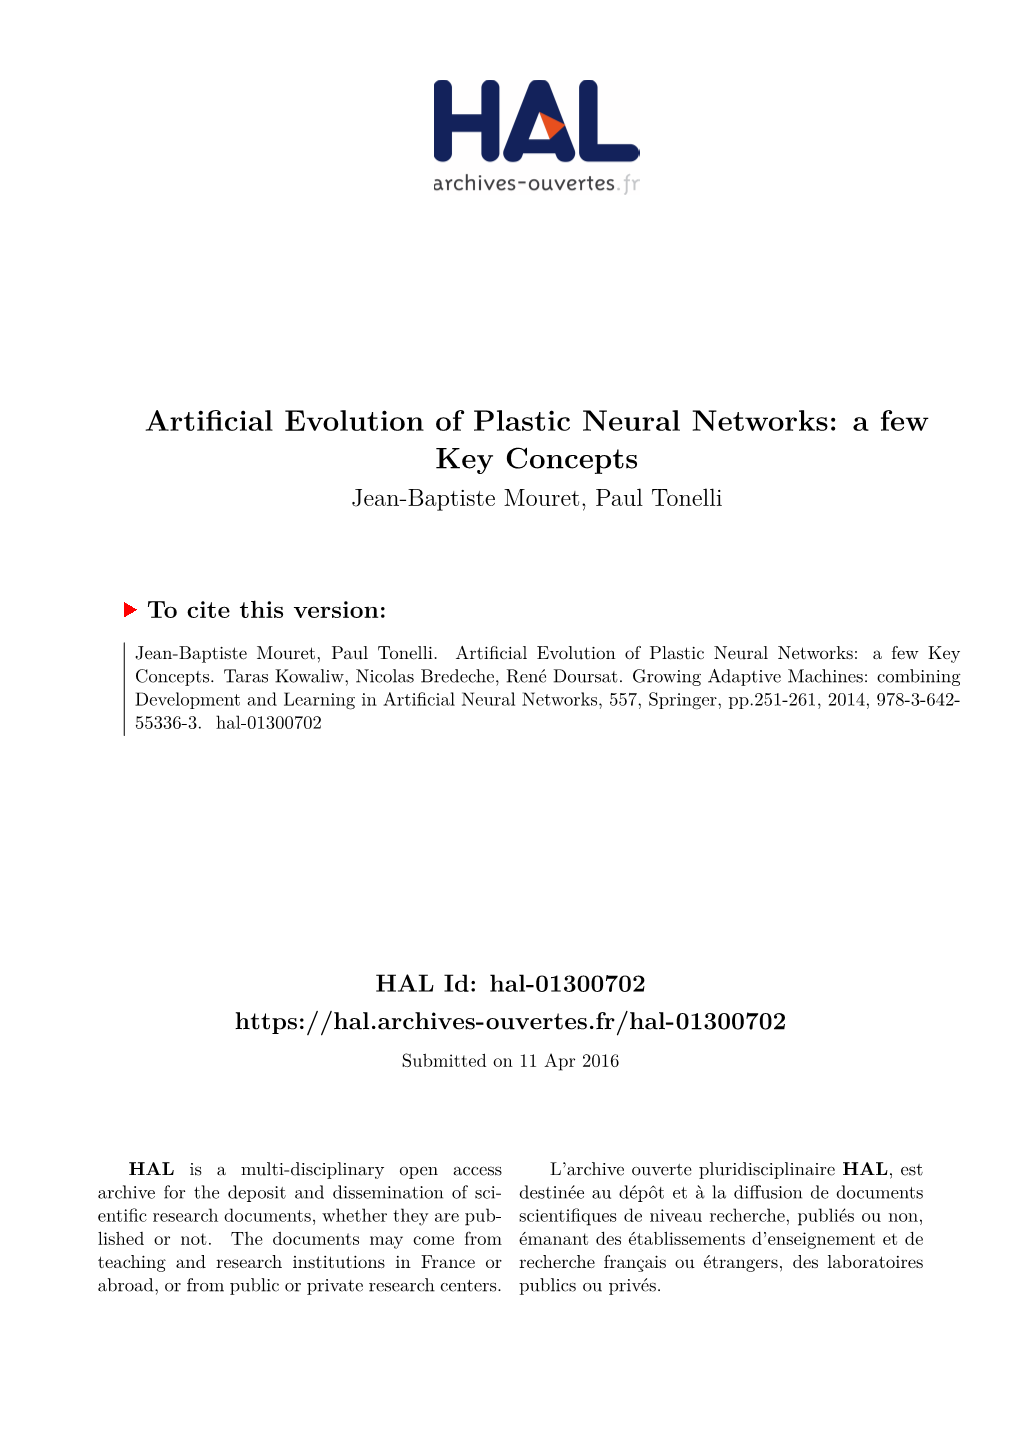 Artificial Evolution of Plastic Neural Networks: Afew Key Concepts Jean-Baptiste Mouret, Paul Tonelli